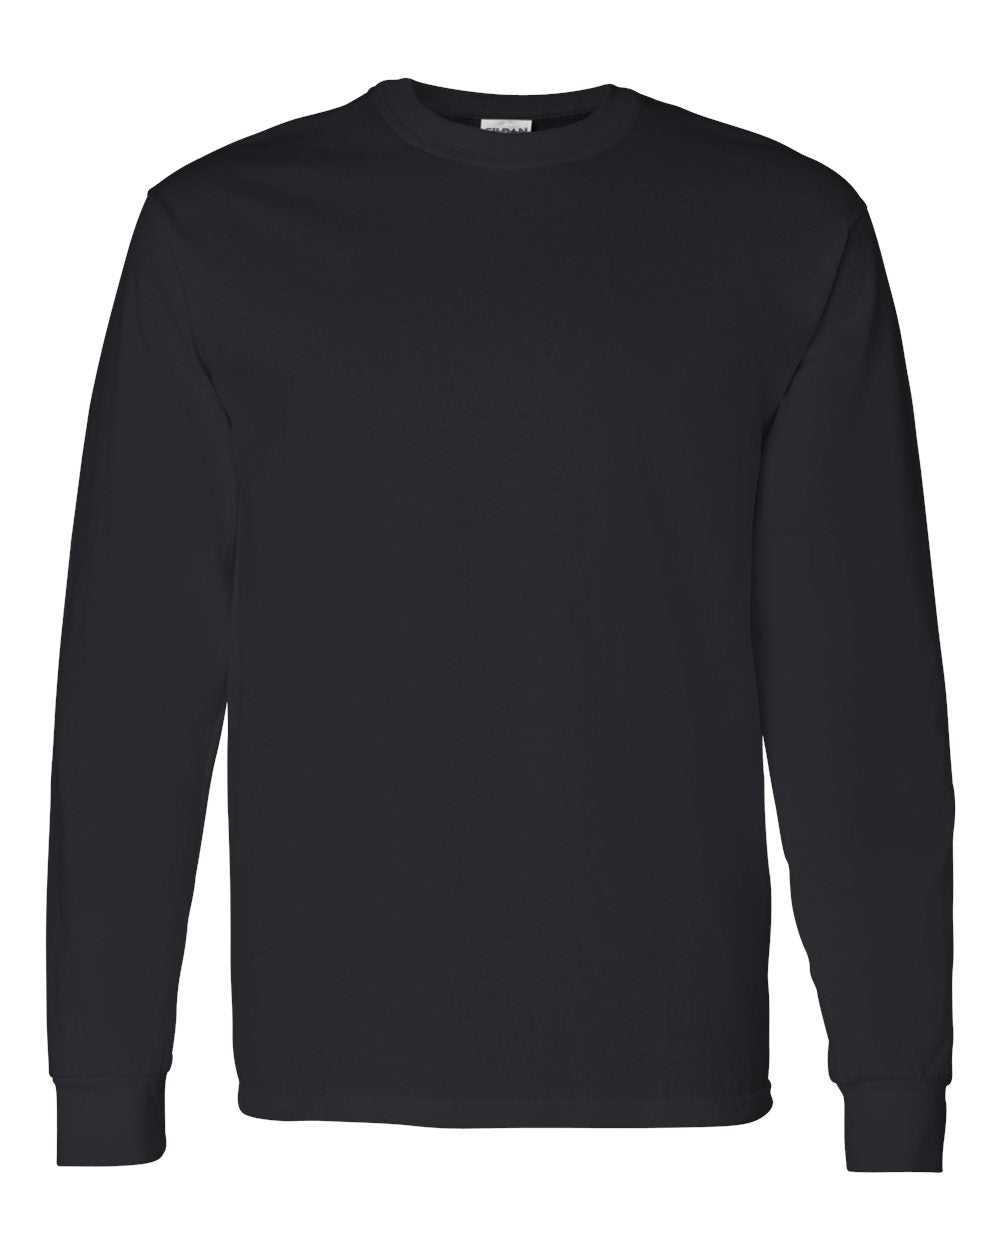 Pretreated Gildan 5400 Heavy Cotton Long Sleeve T-Shirt - Black